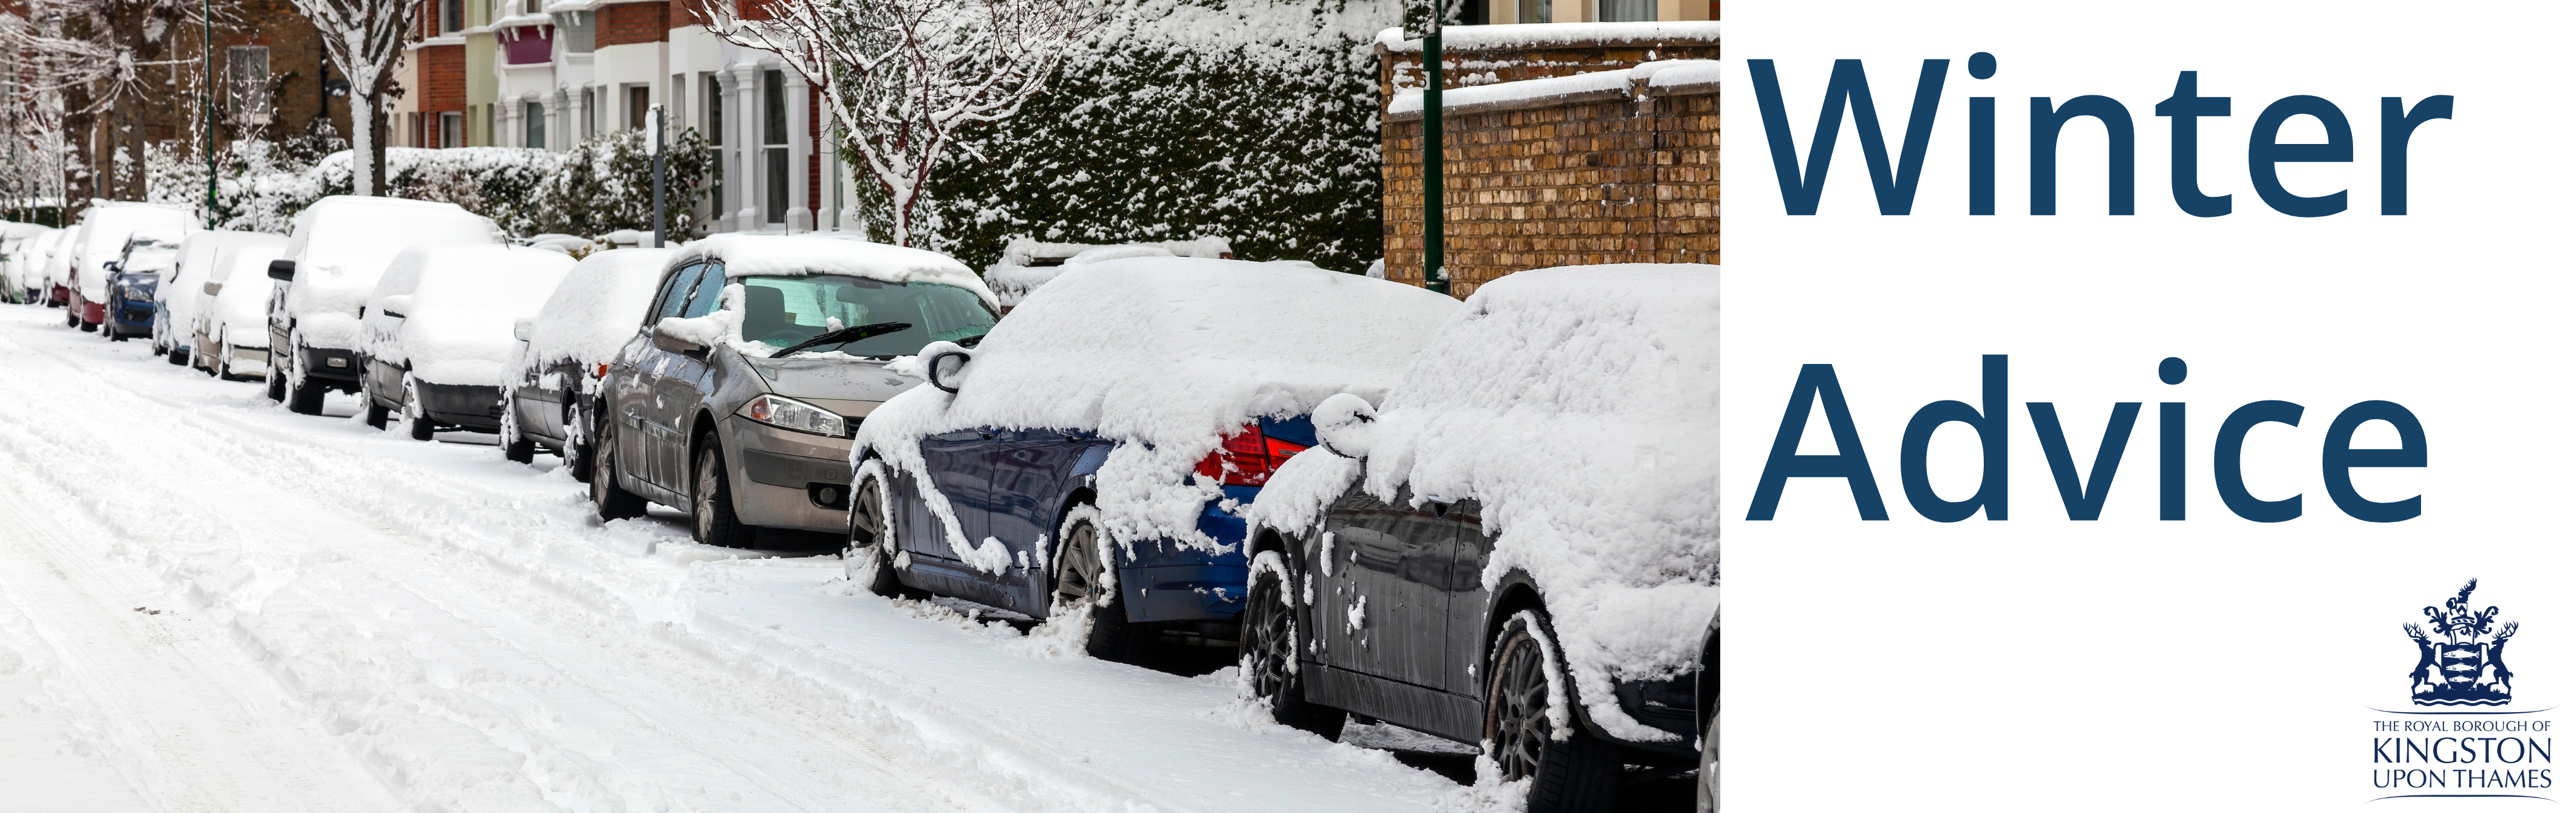 Snow on cars